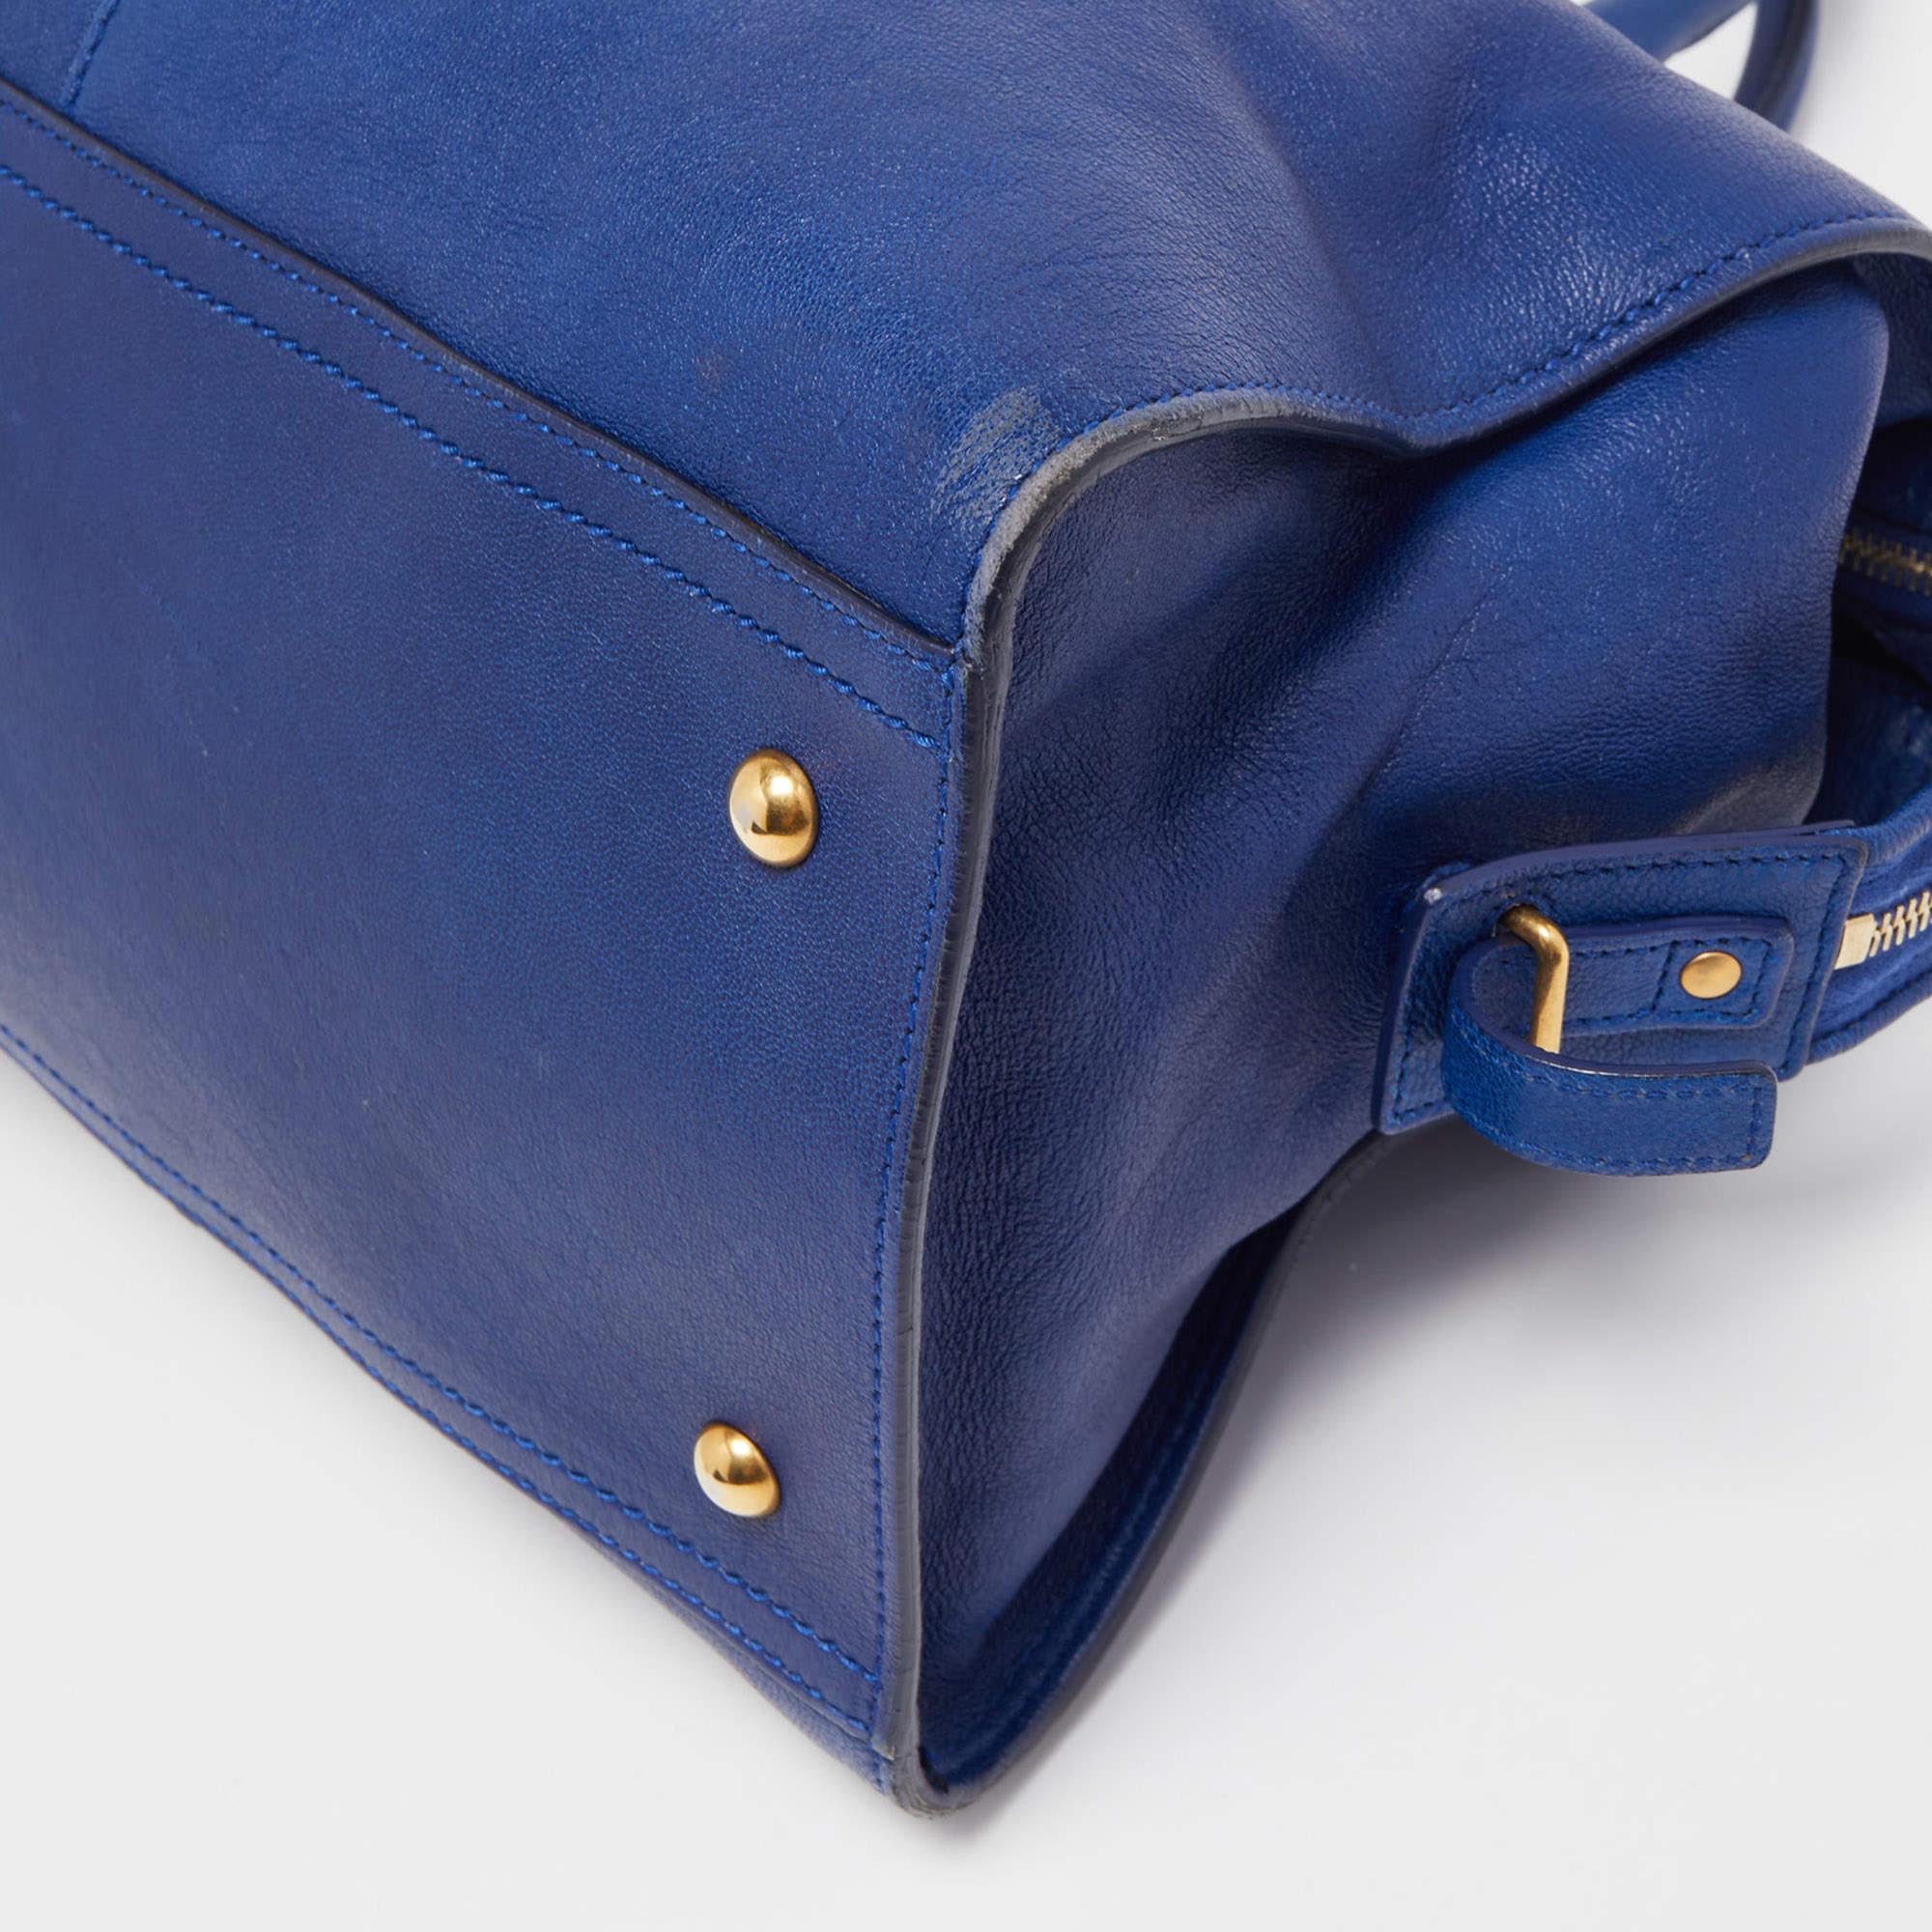 Yves Saint Laurent Blue Leather Medium Cabas Chyc Tote In Good Condition For Sale In Dubai, Al Qouz 2